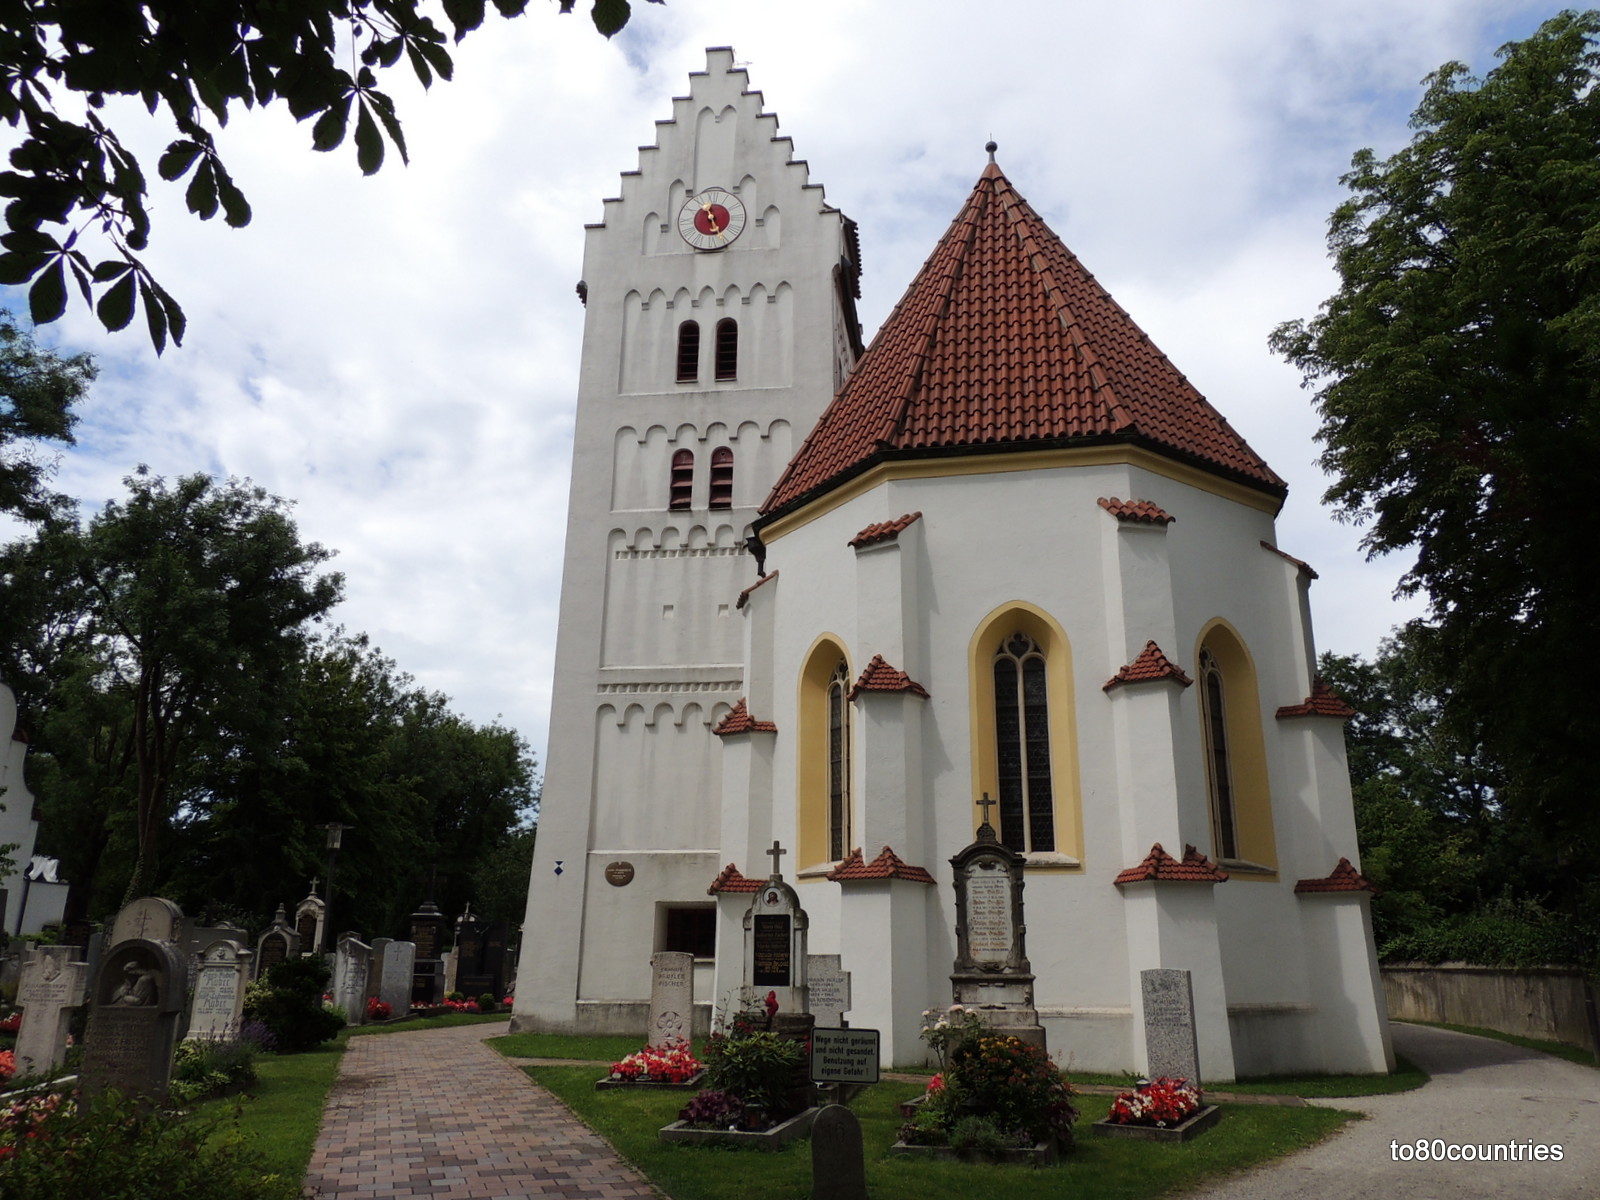 Kirche St. Martin in Untermenzing